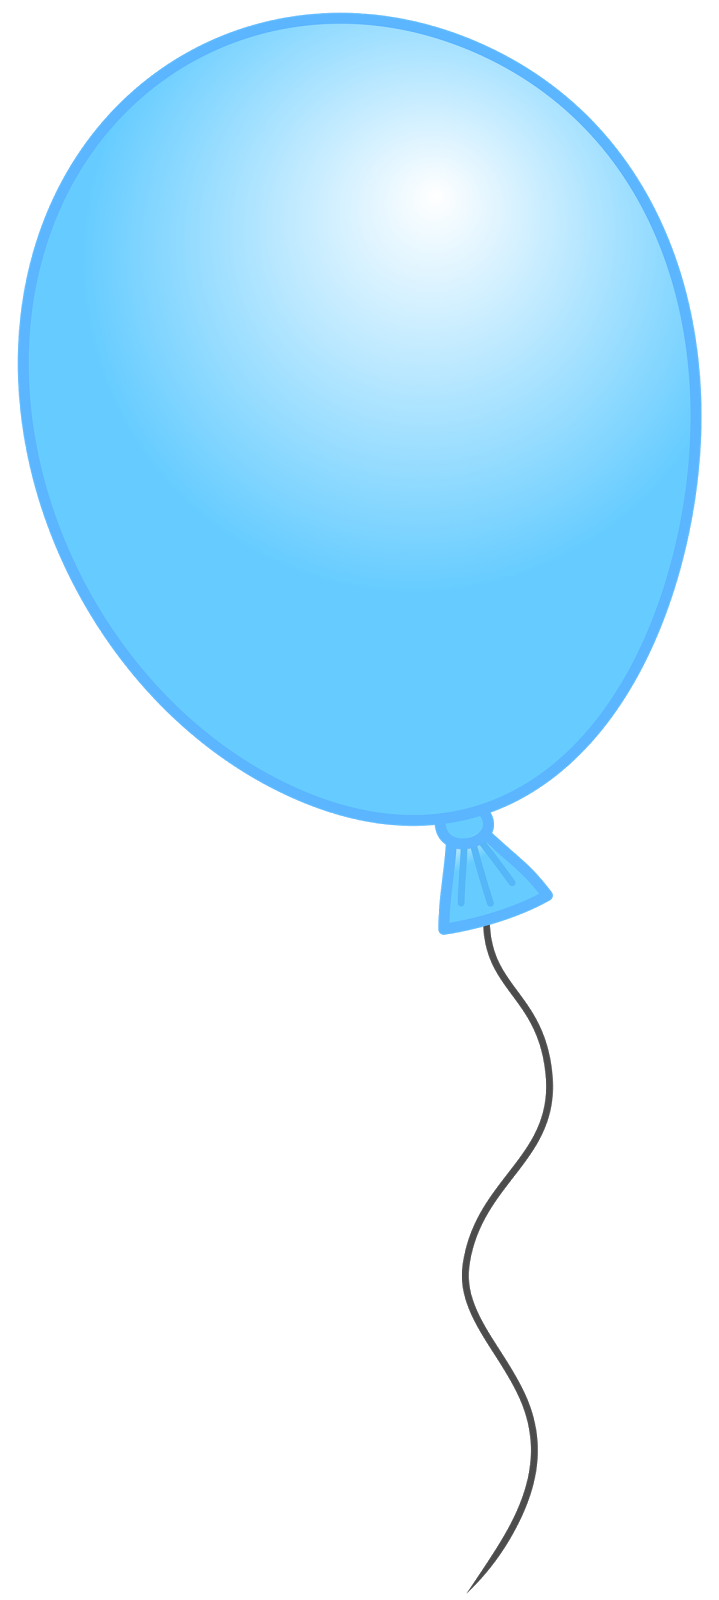 Single Balloon Free PNG Image